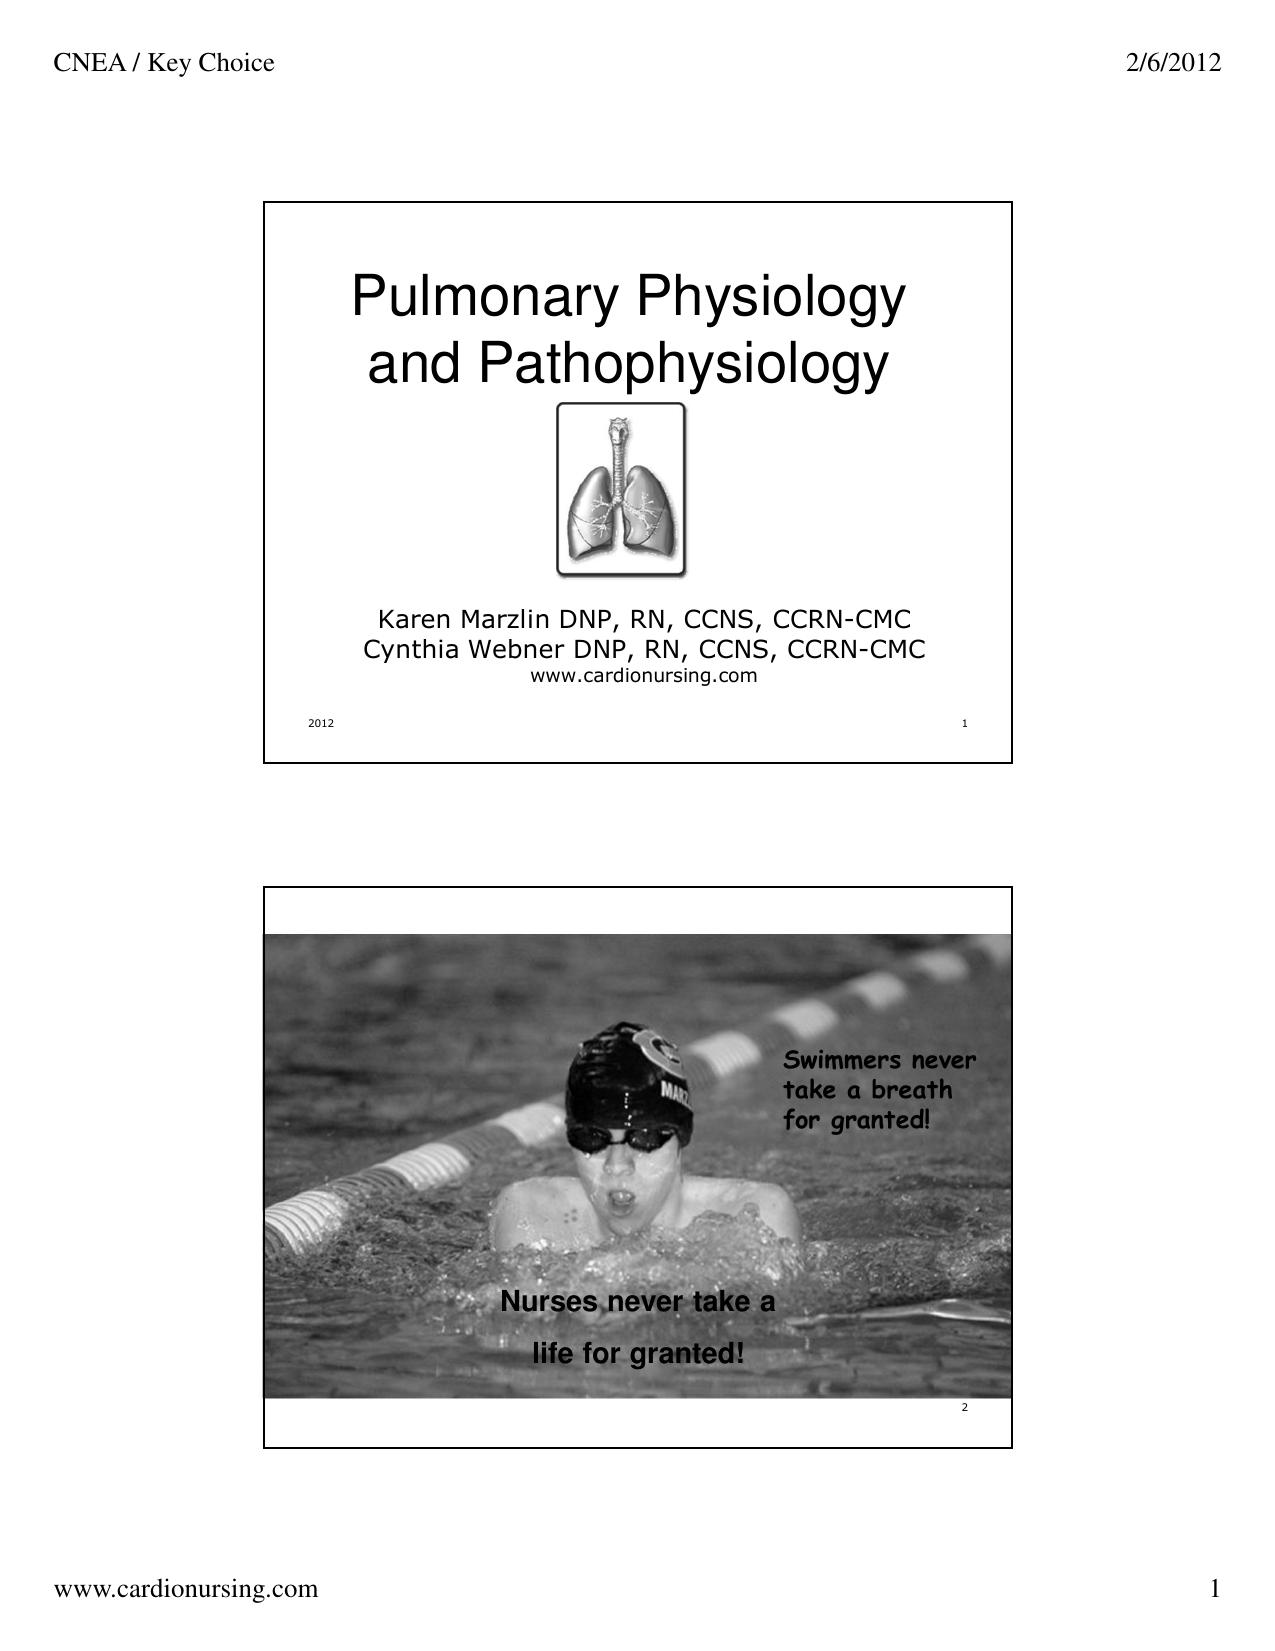 Microsoft PowerPoint - Pulmonary Physiology and Pathophysiology